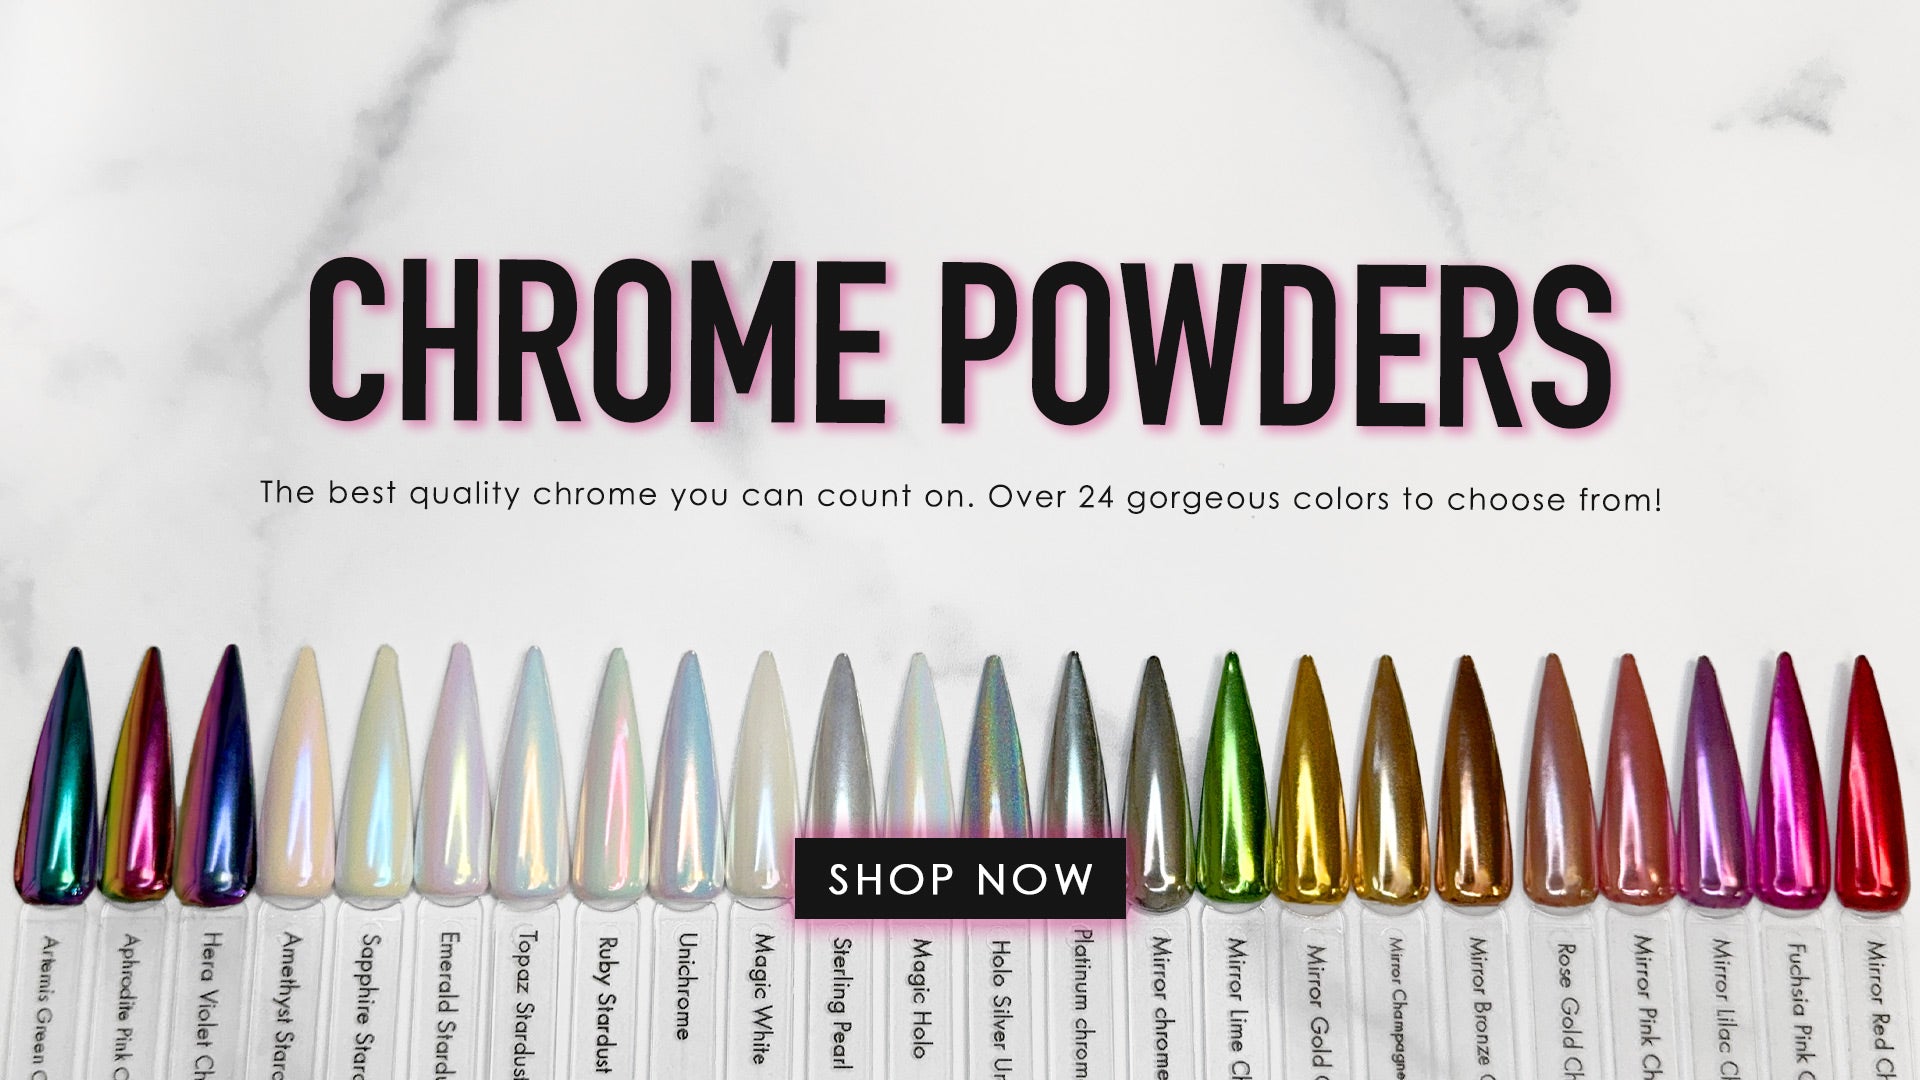 The Best Chrome Powder for Glazed Nail Art